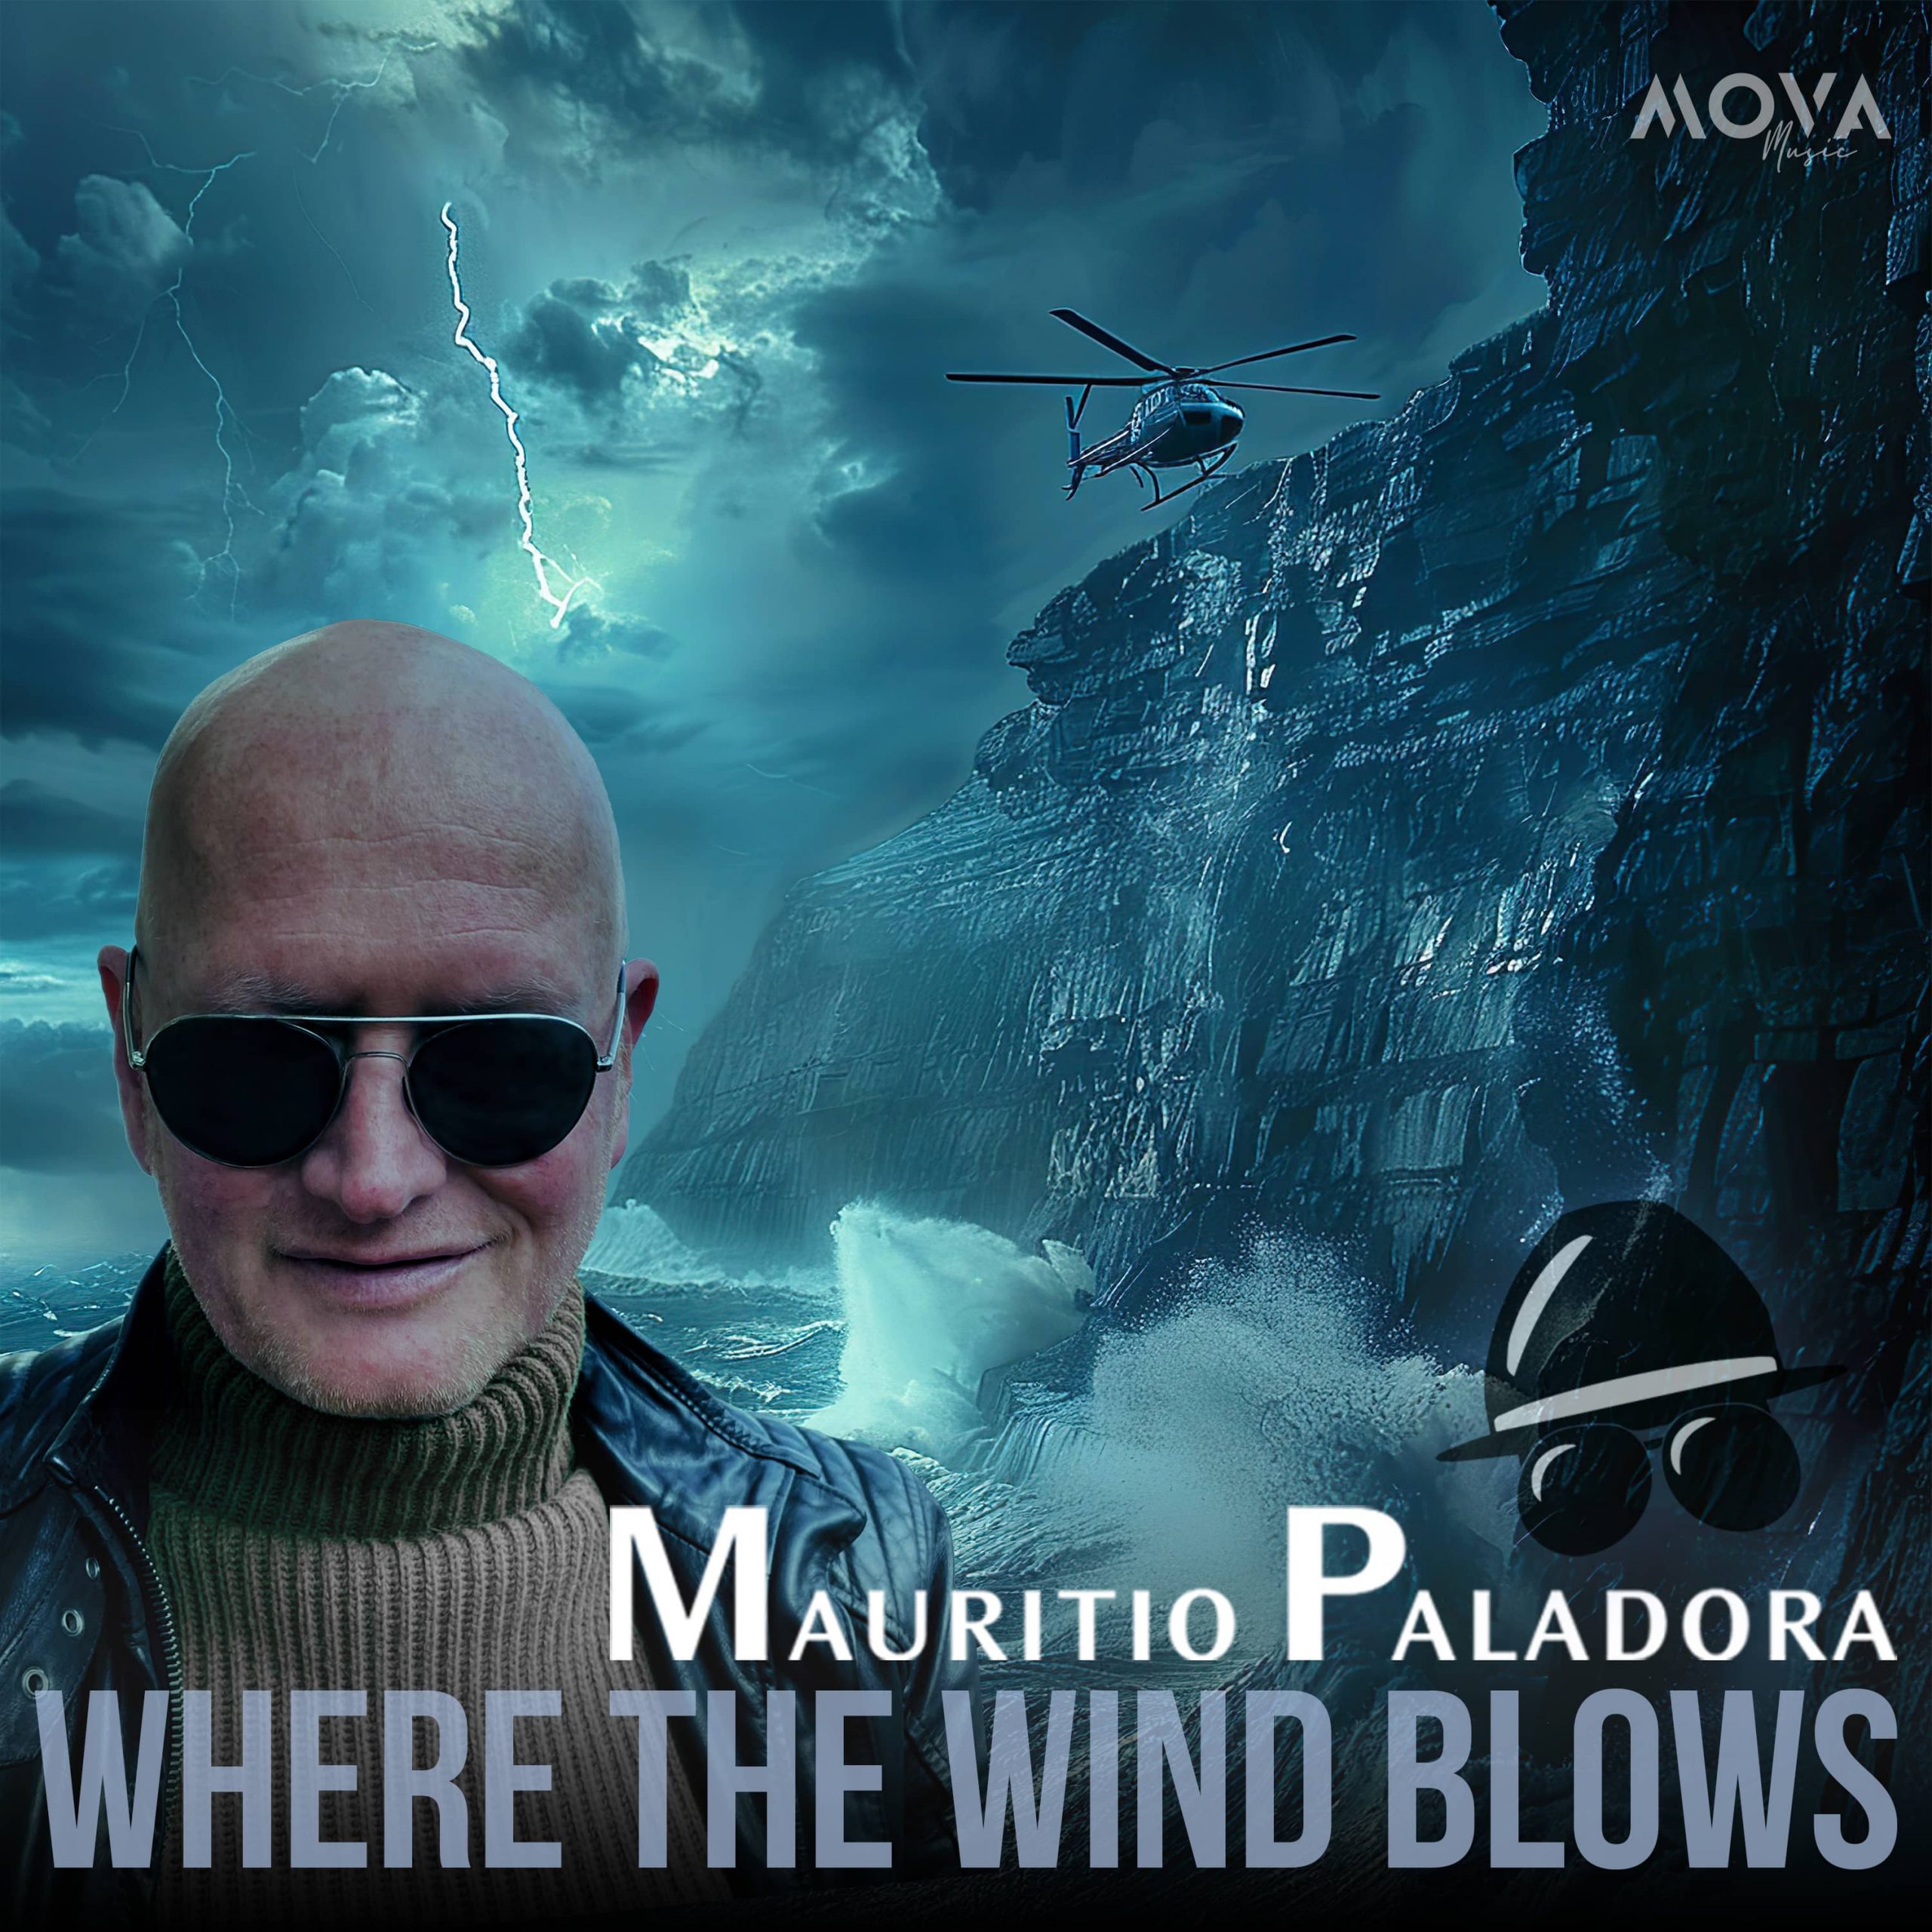 Mauritio Paladora – Where the wind blows